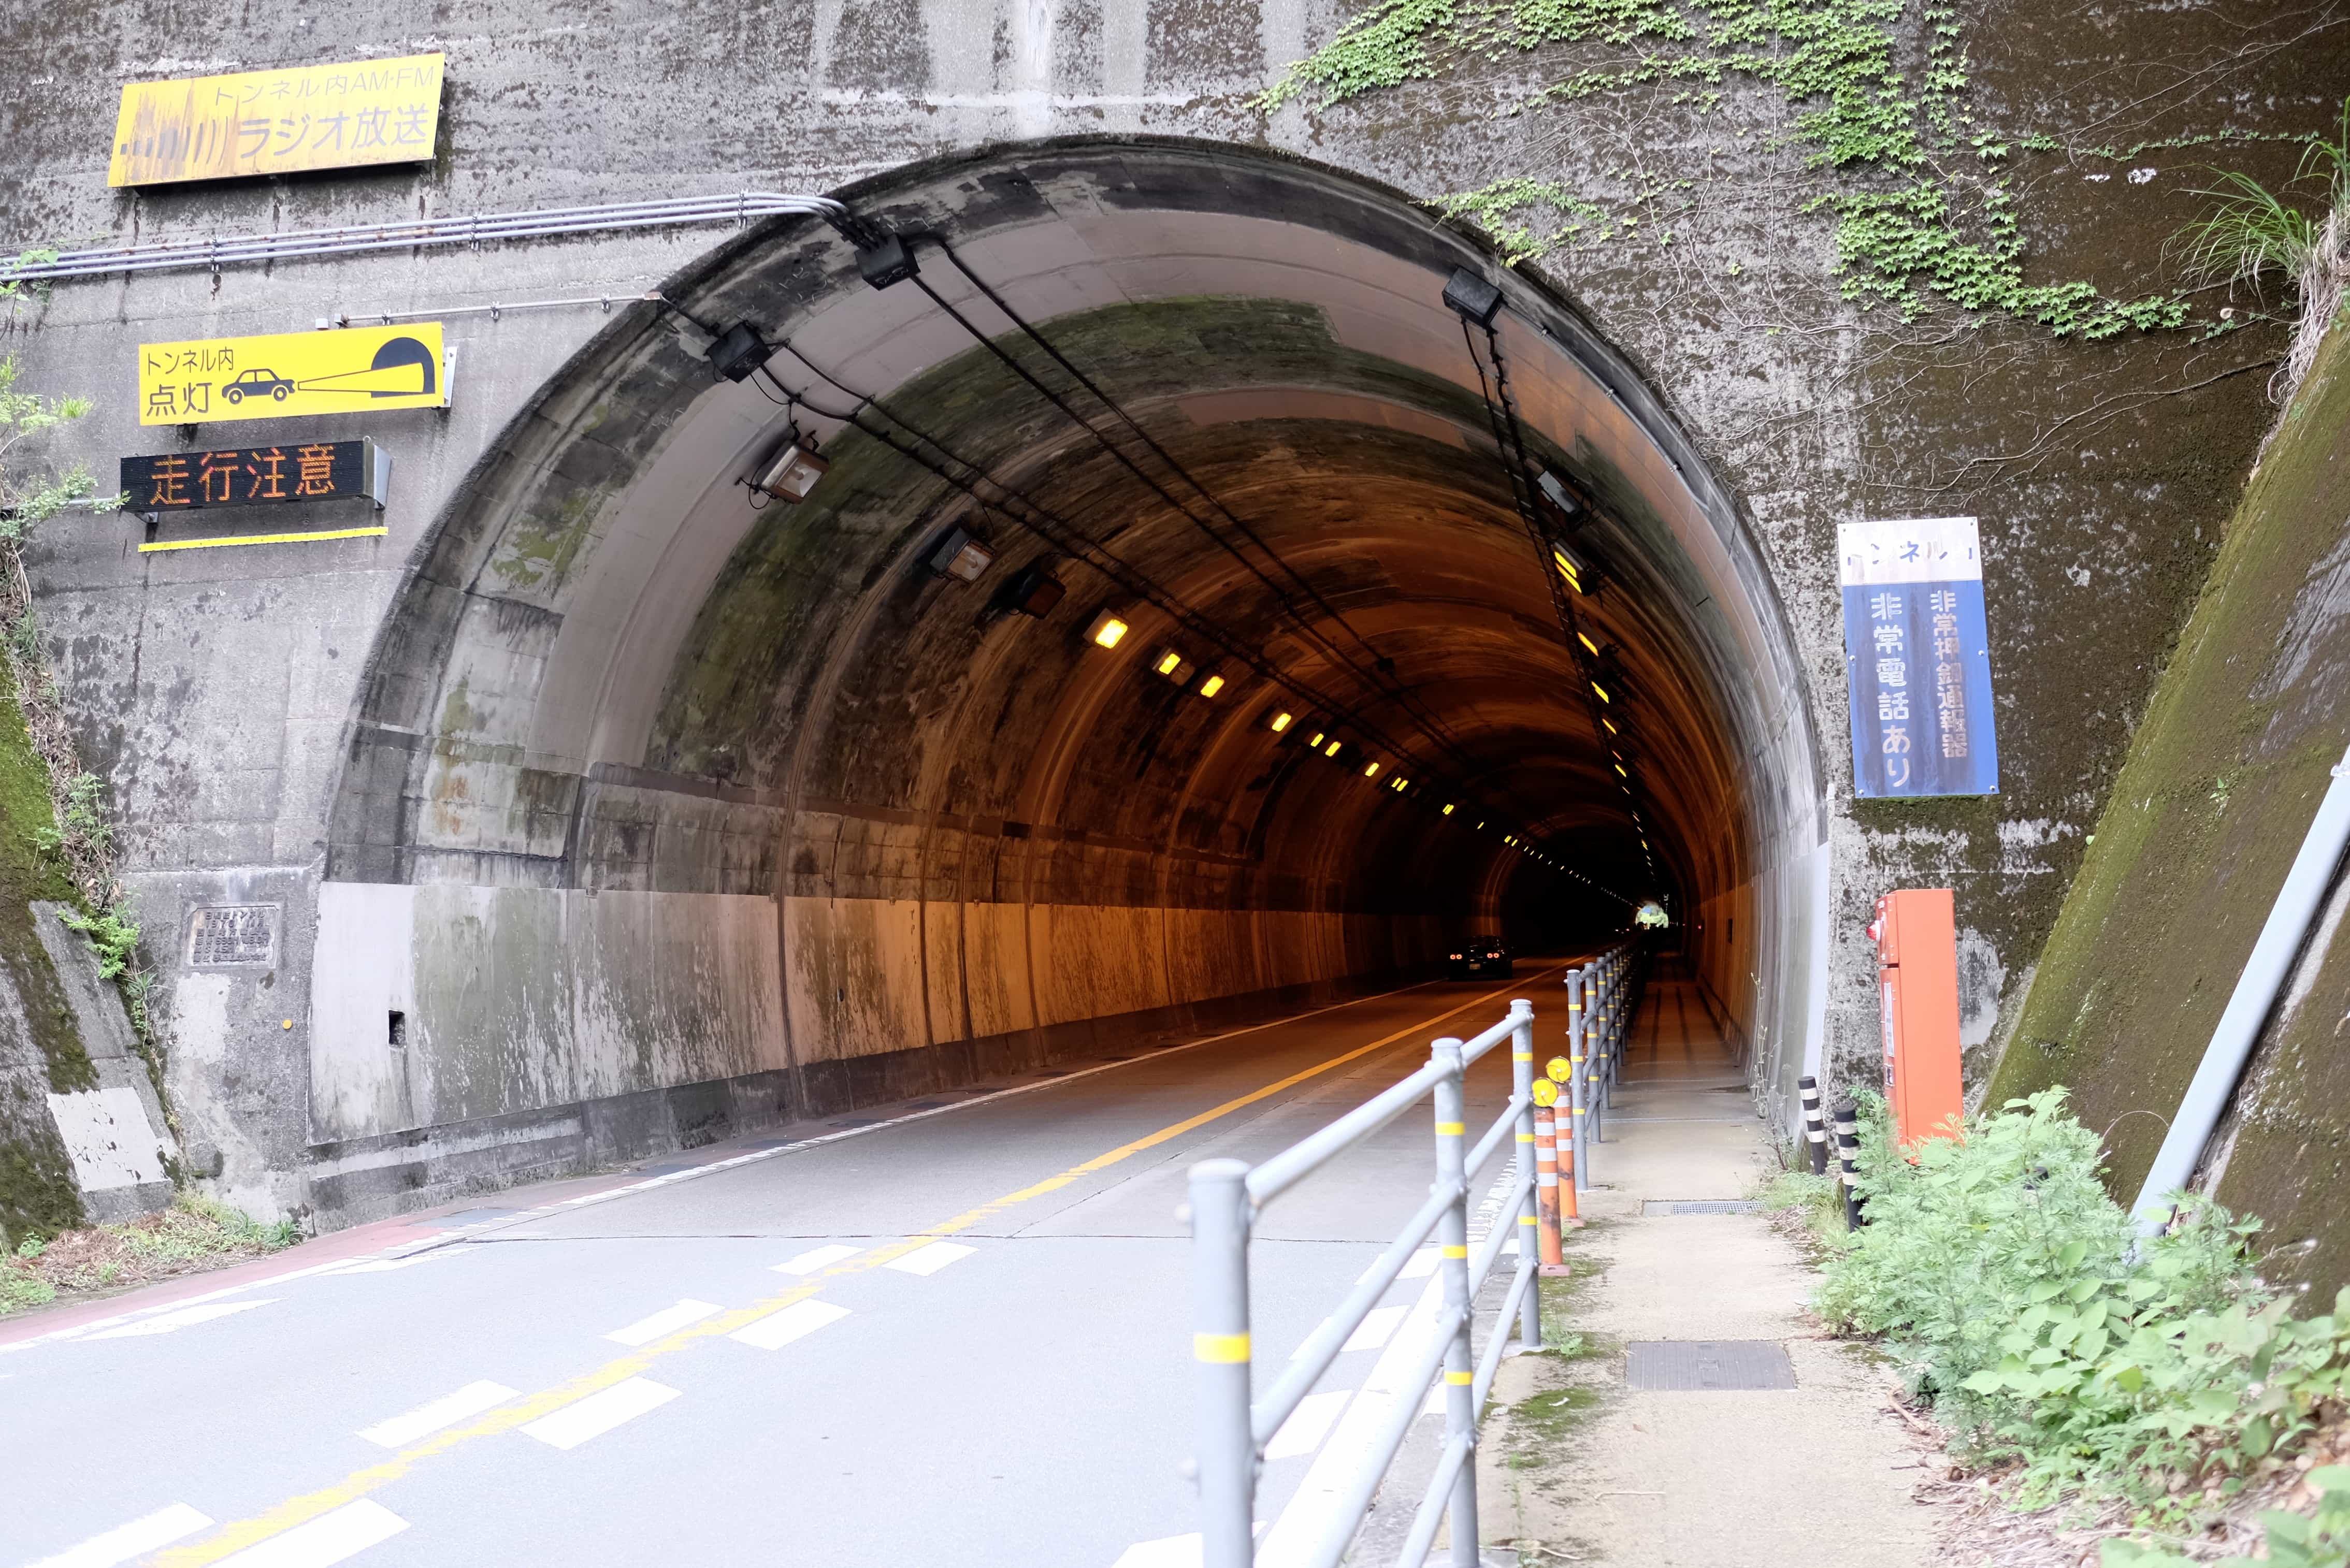 Hiwasa Tunnel